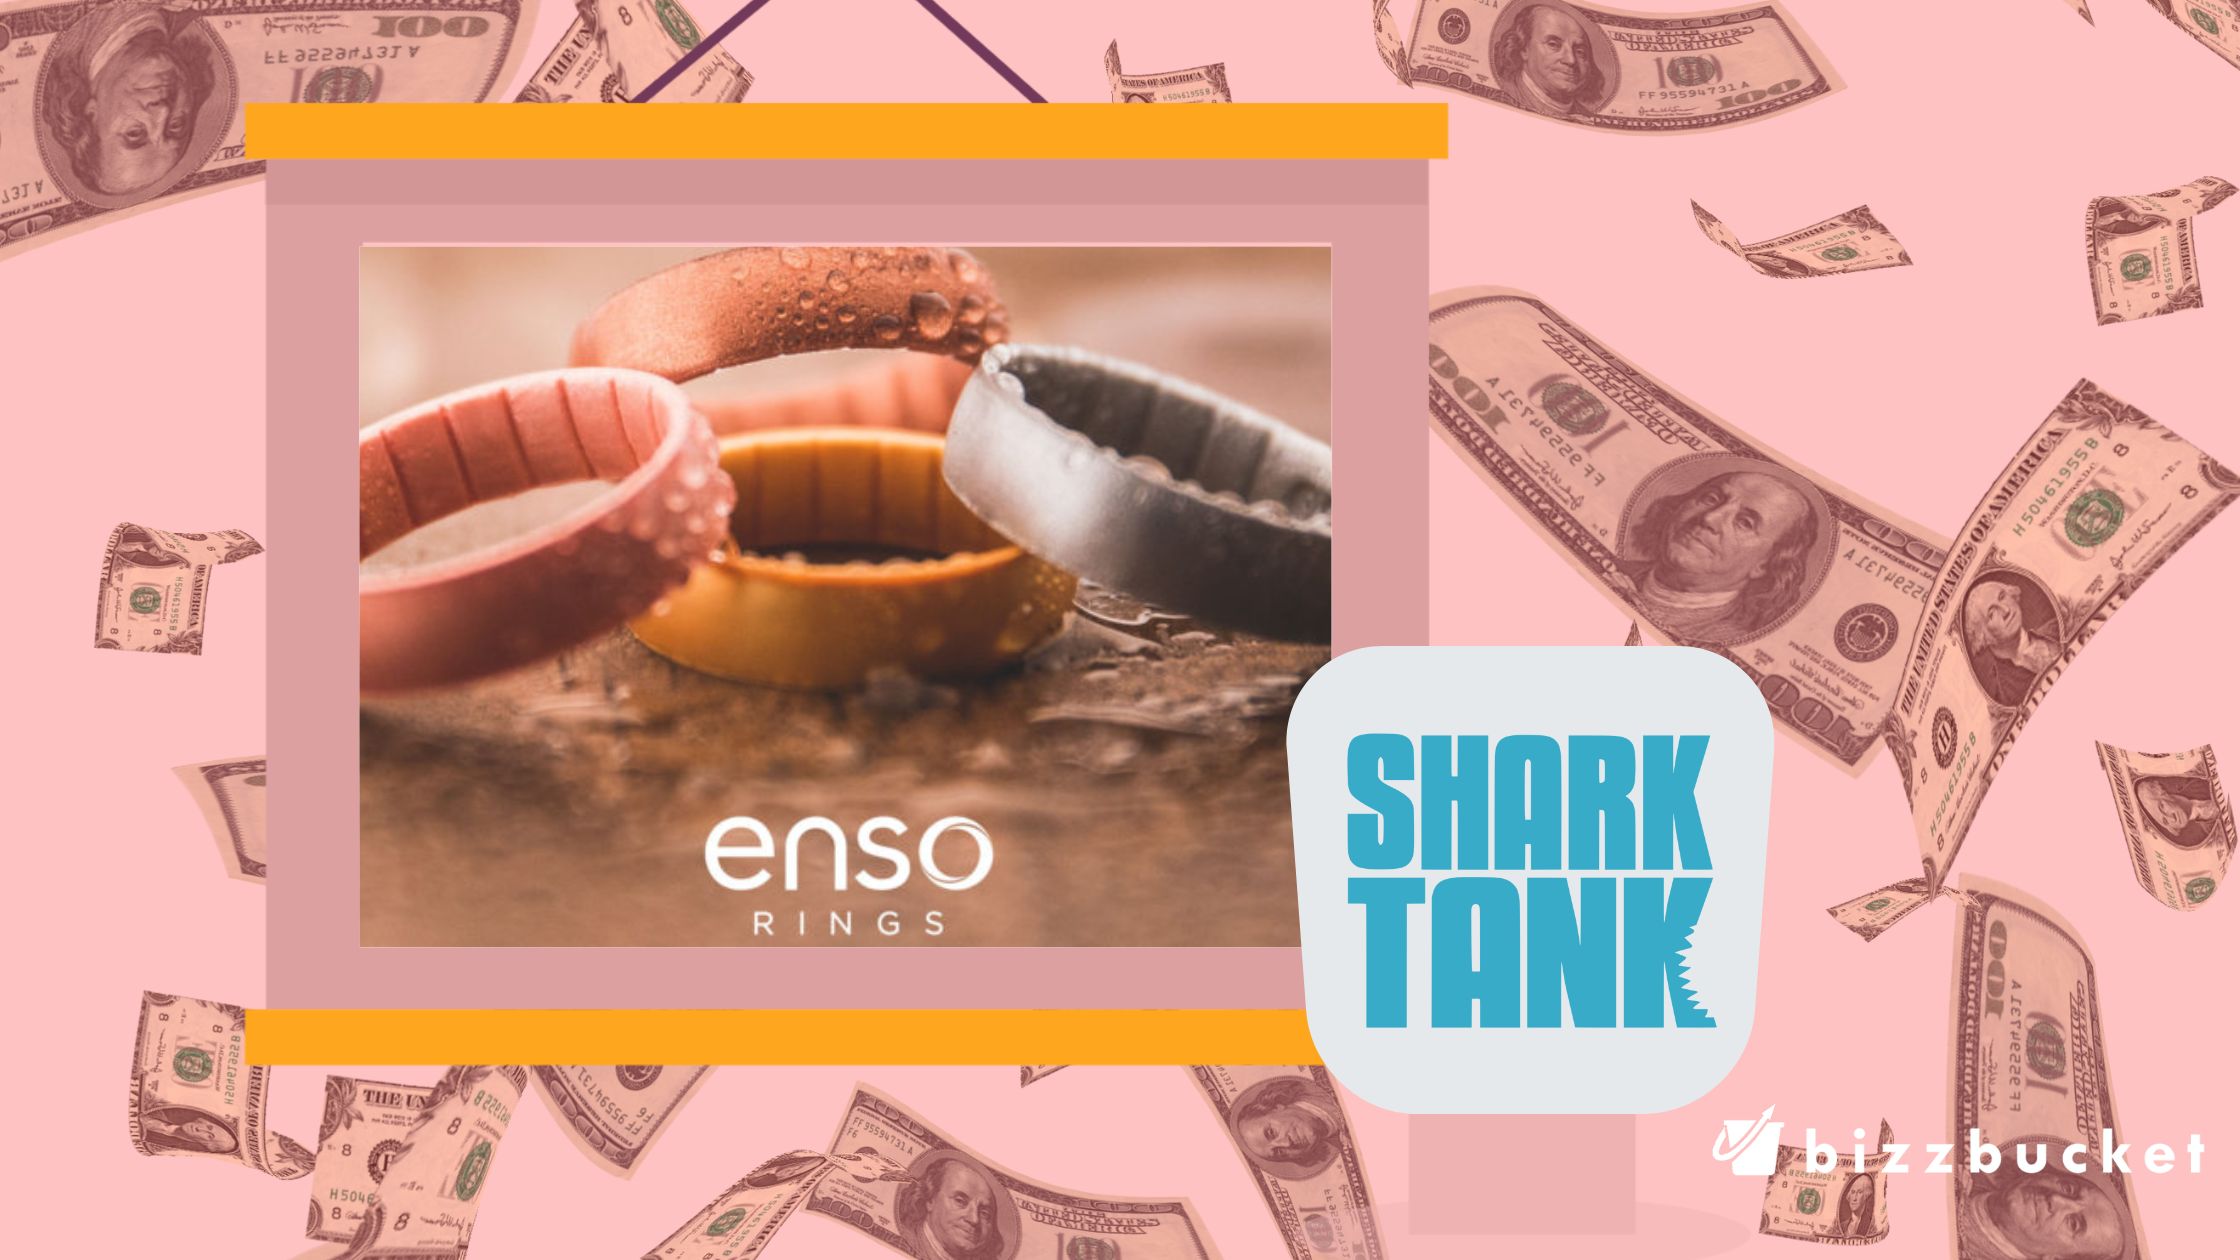 Enso Rings shark tank update